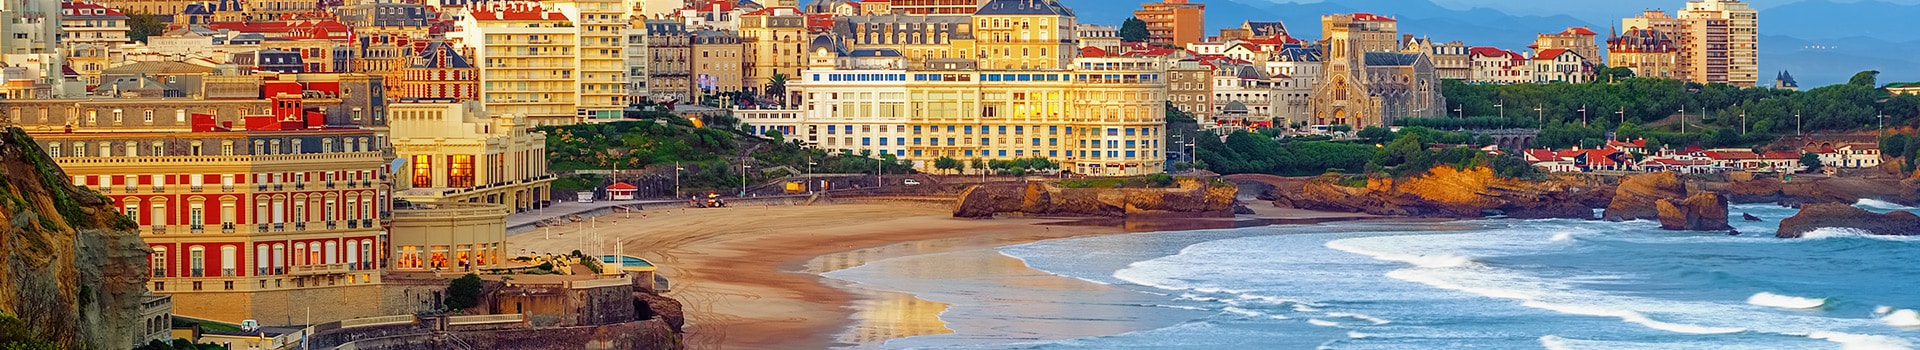 Biarritz-Anglet-Bayonne